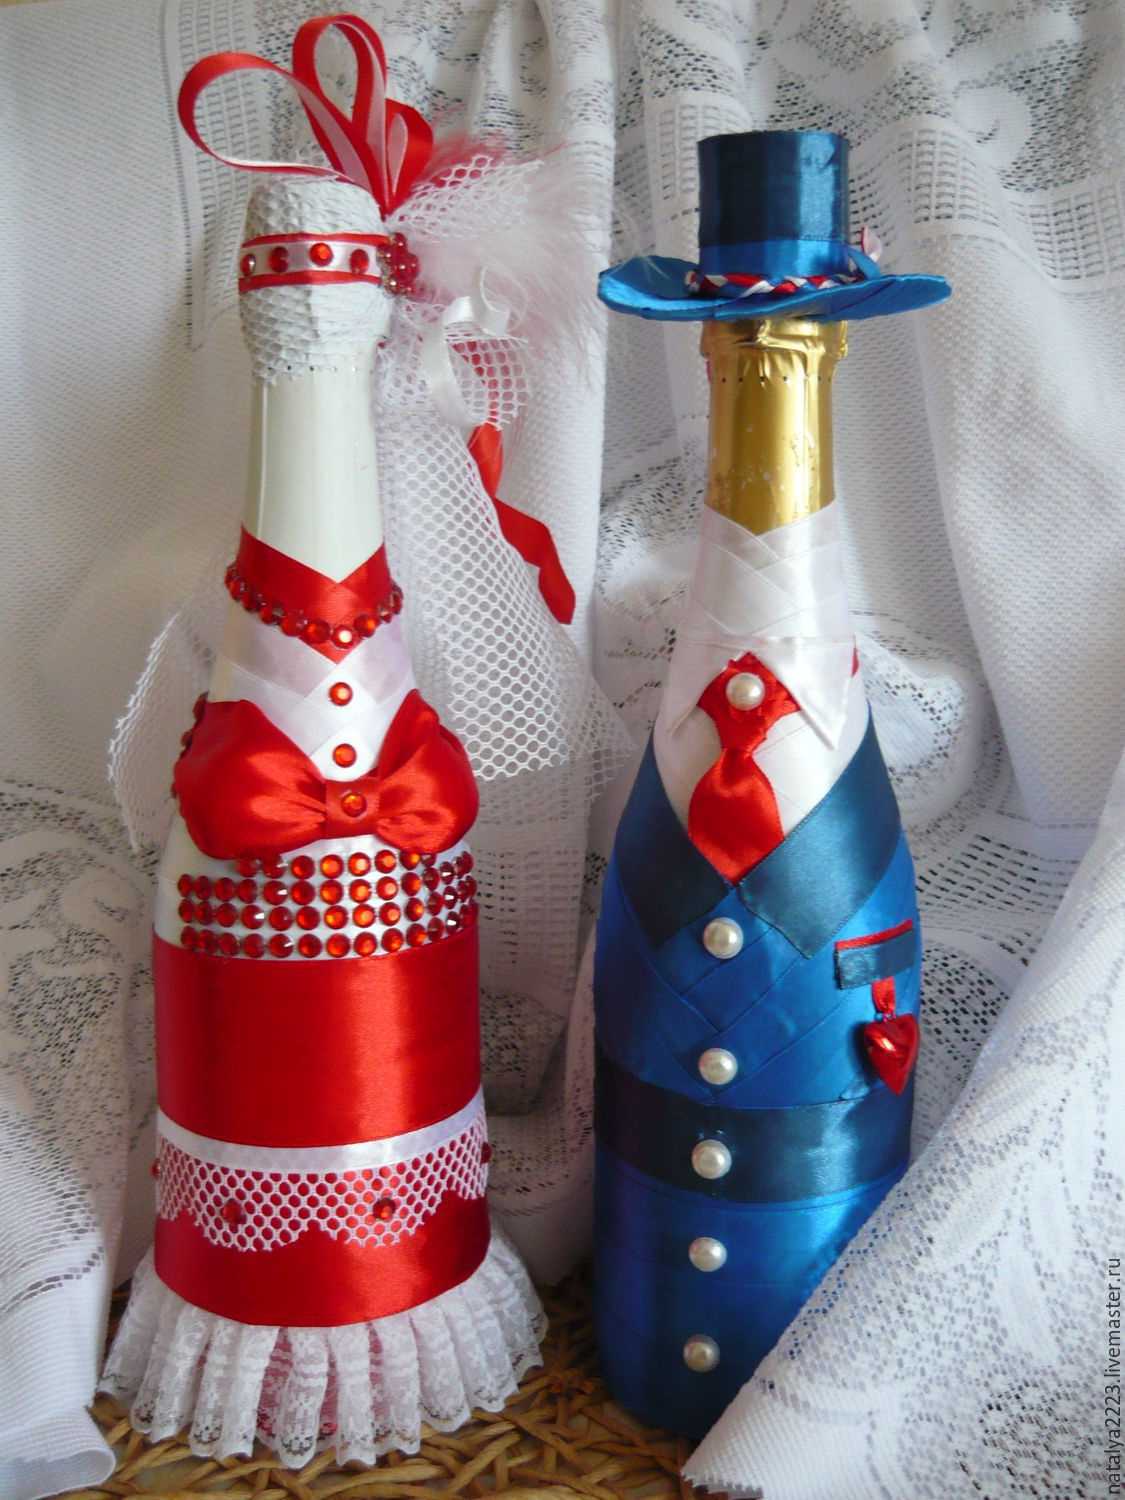 original design of bottles with decorative ribbons